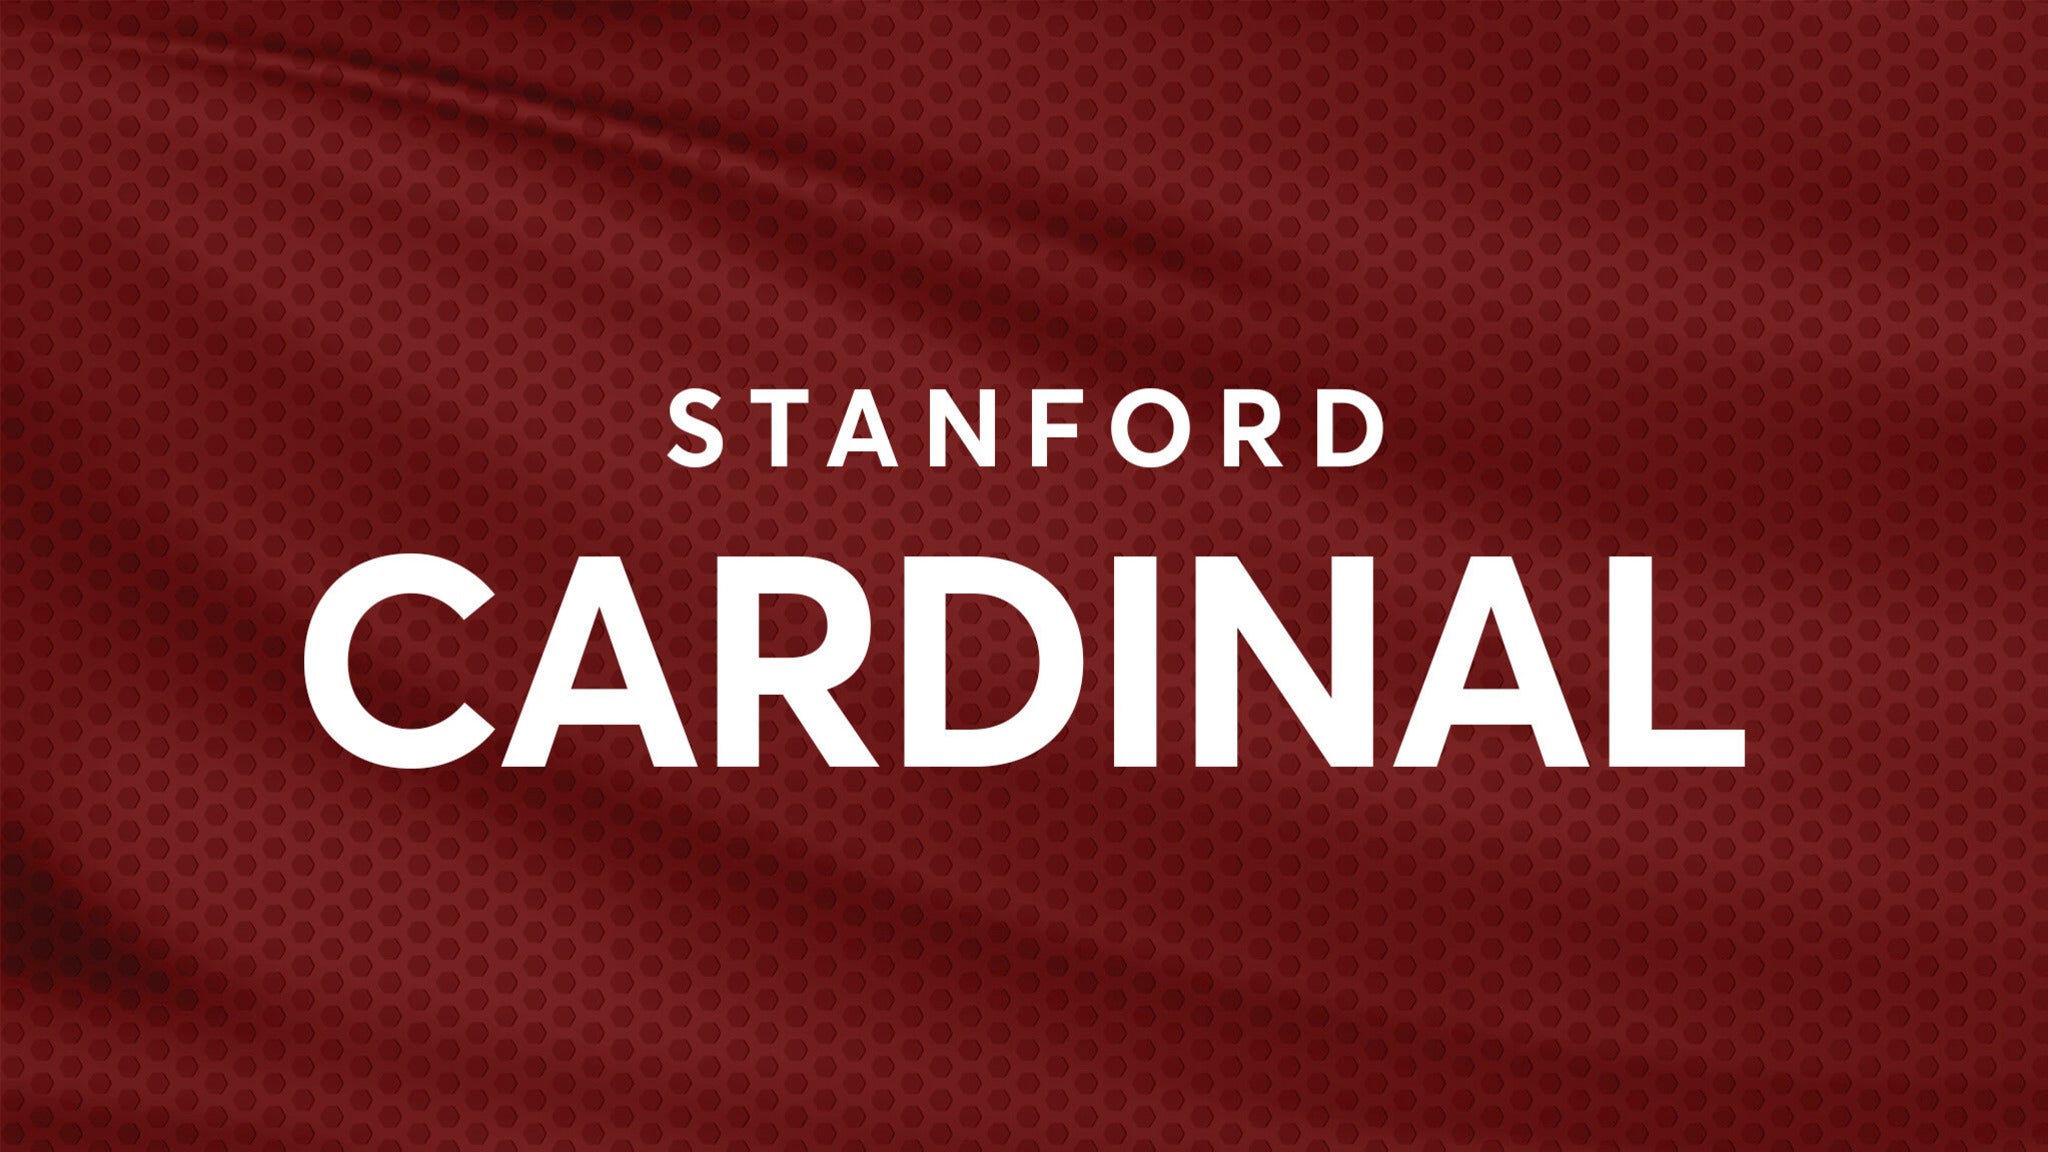 Stanford Cardinal Football vs. UCLA Bruins Football - Stanford, CA 94305